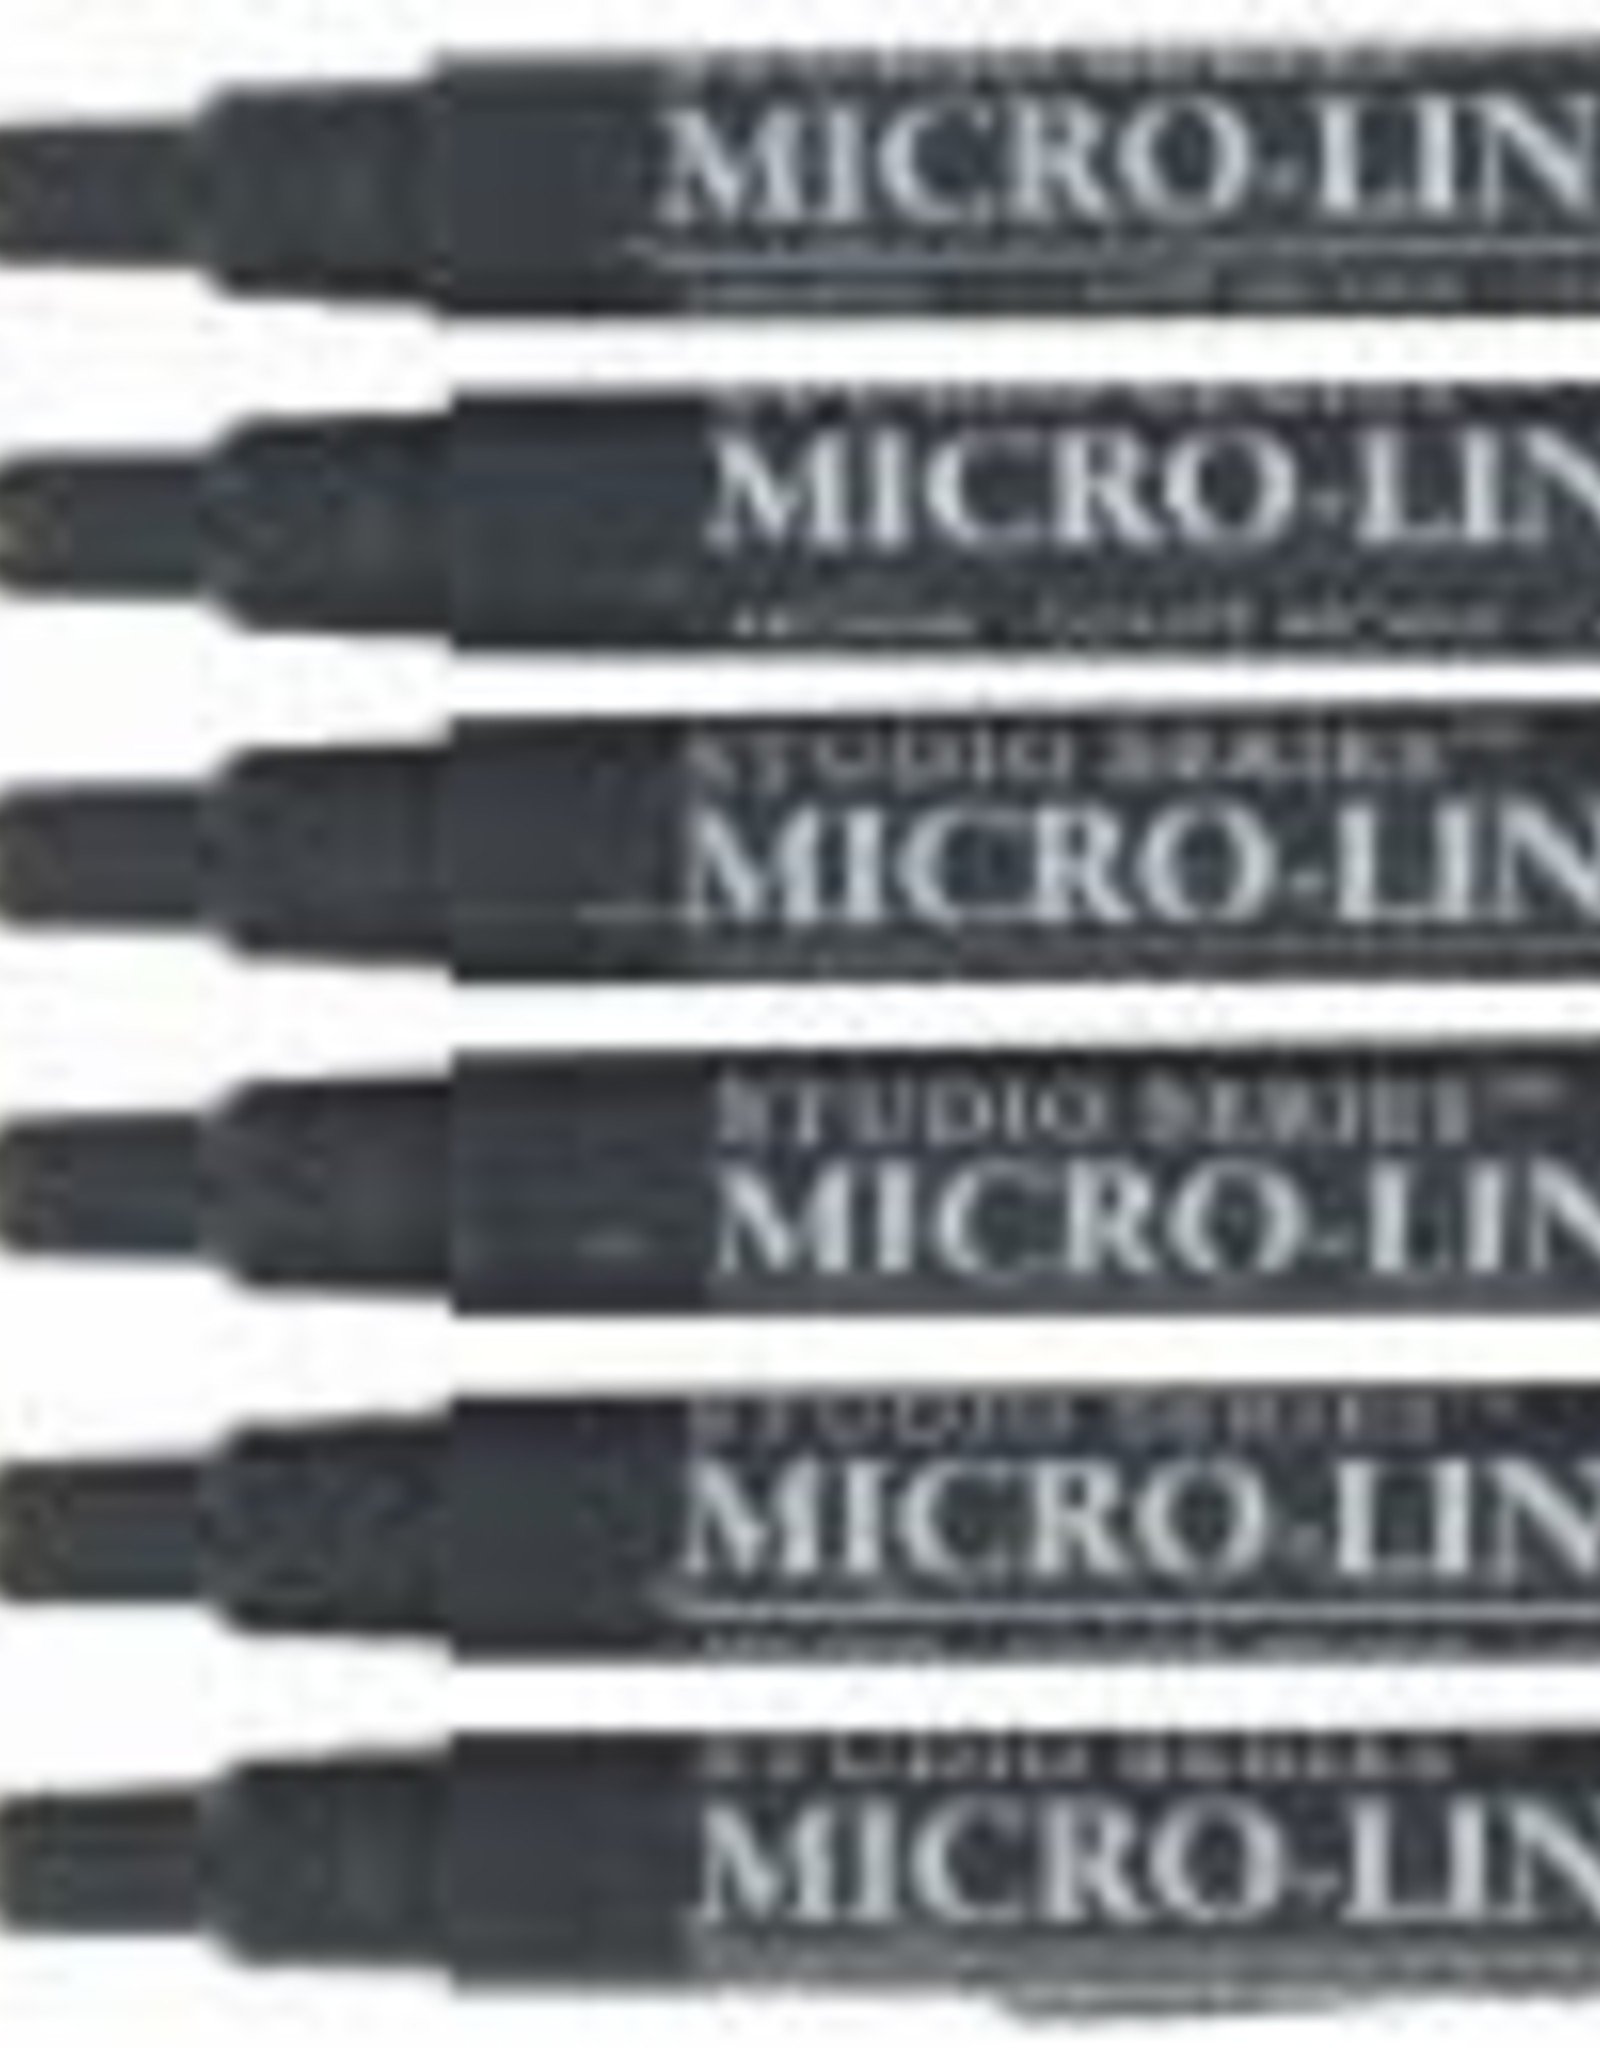 Peter Pauper Press Microline pens